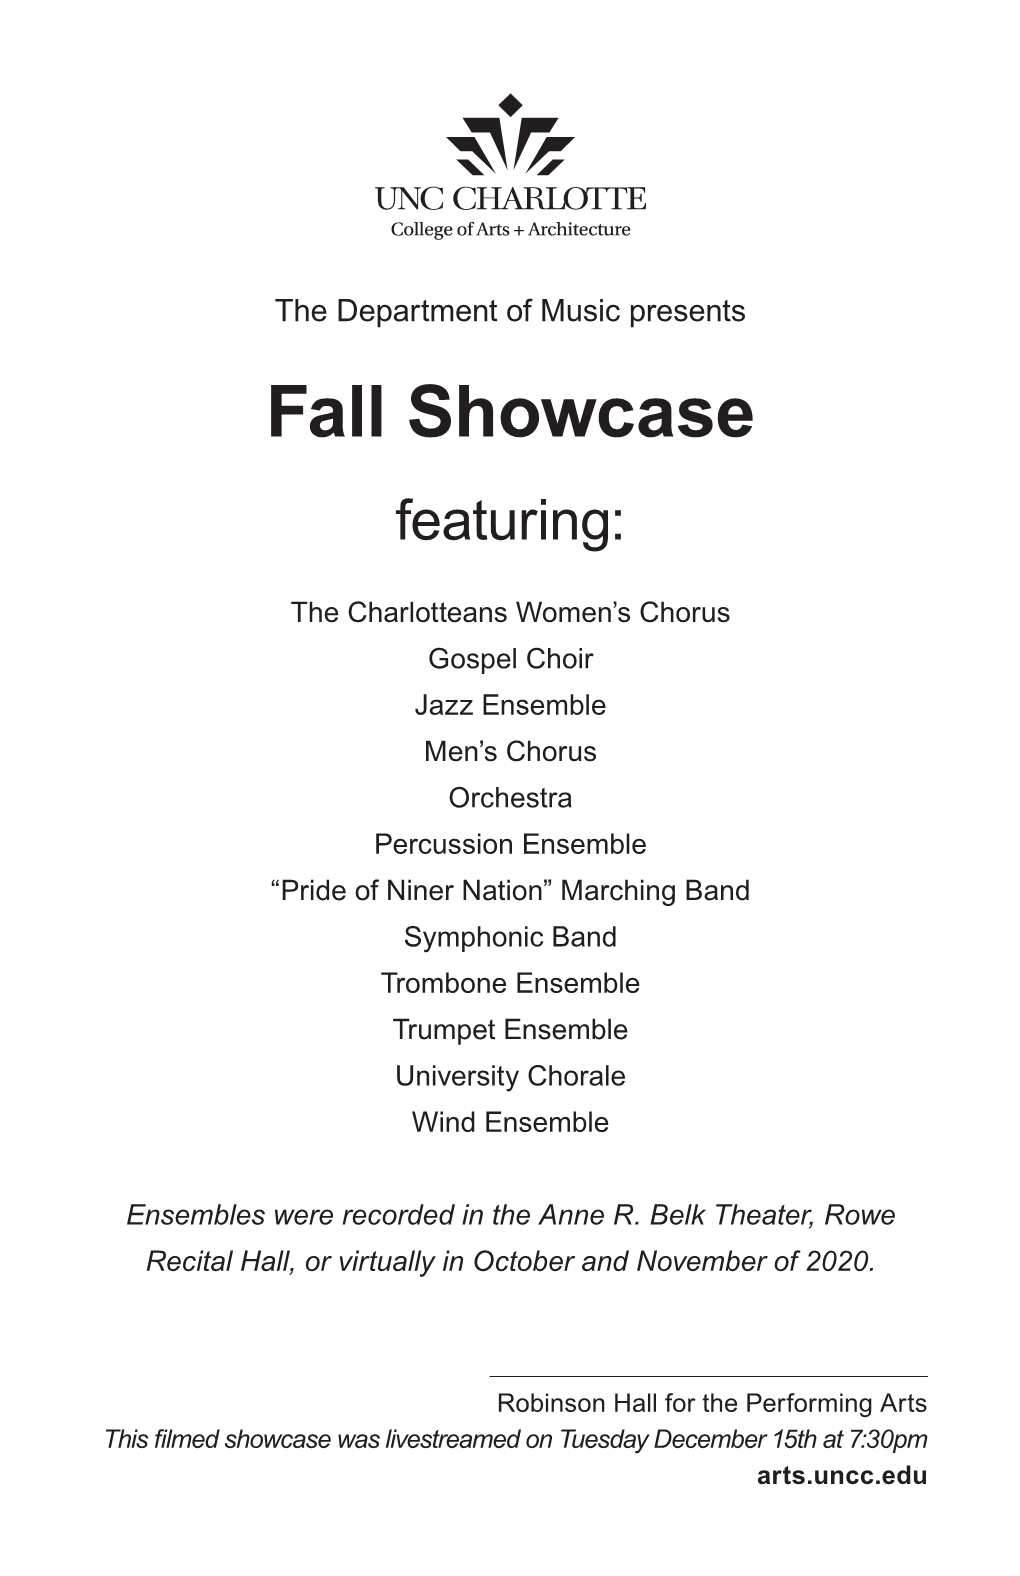 Fall Showcase Featuring